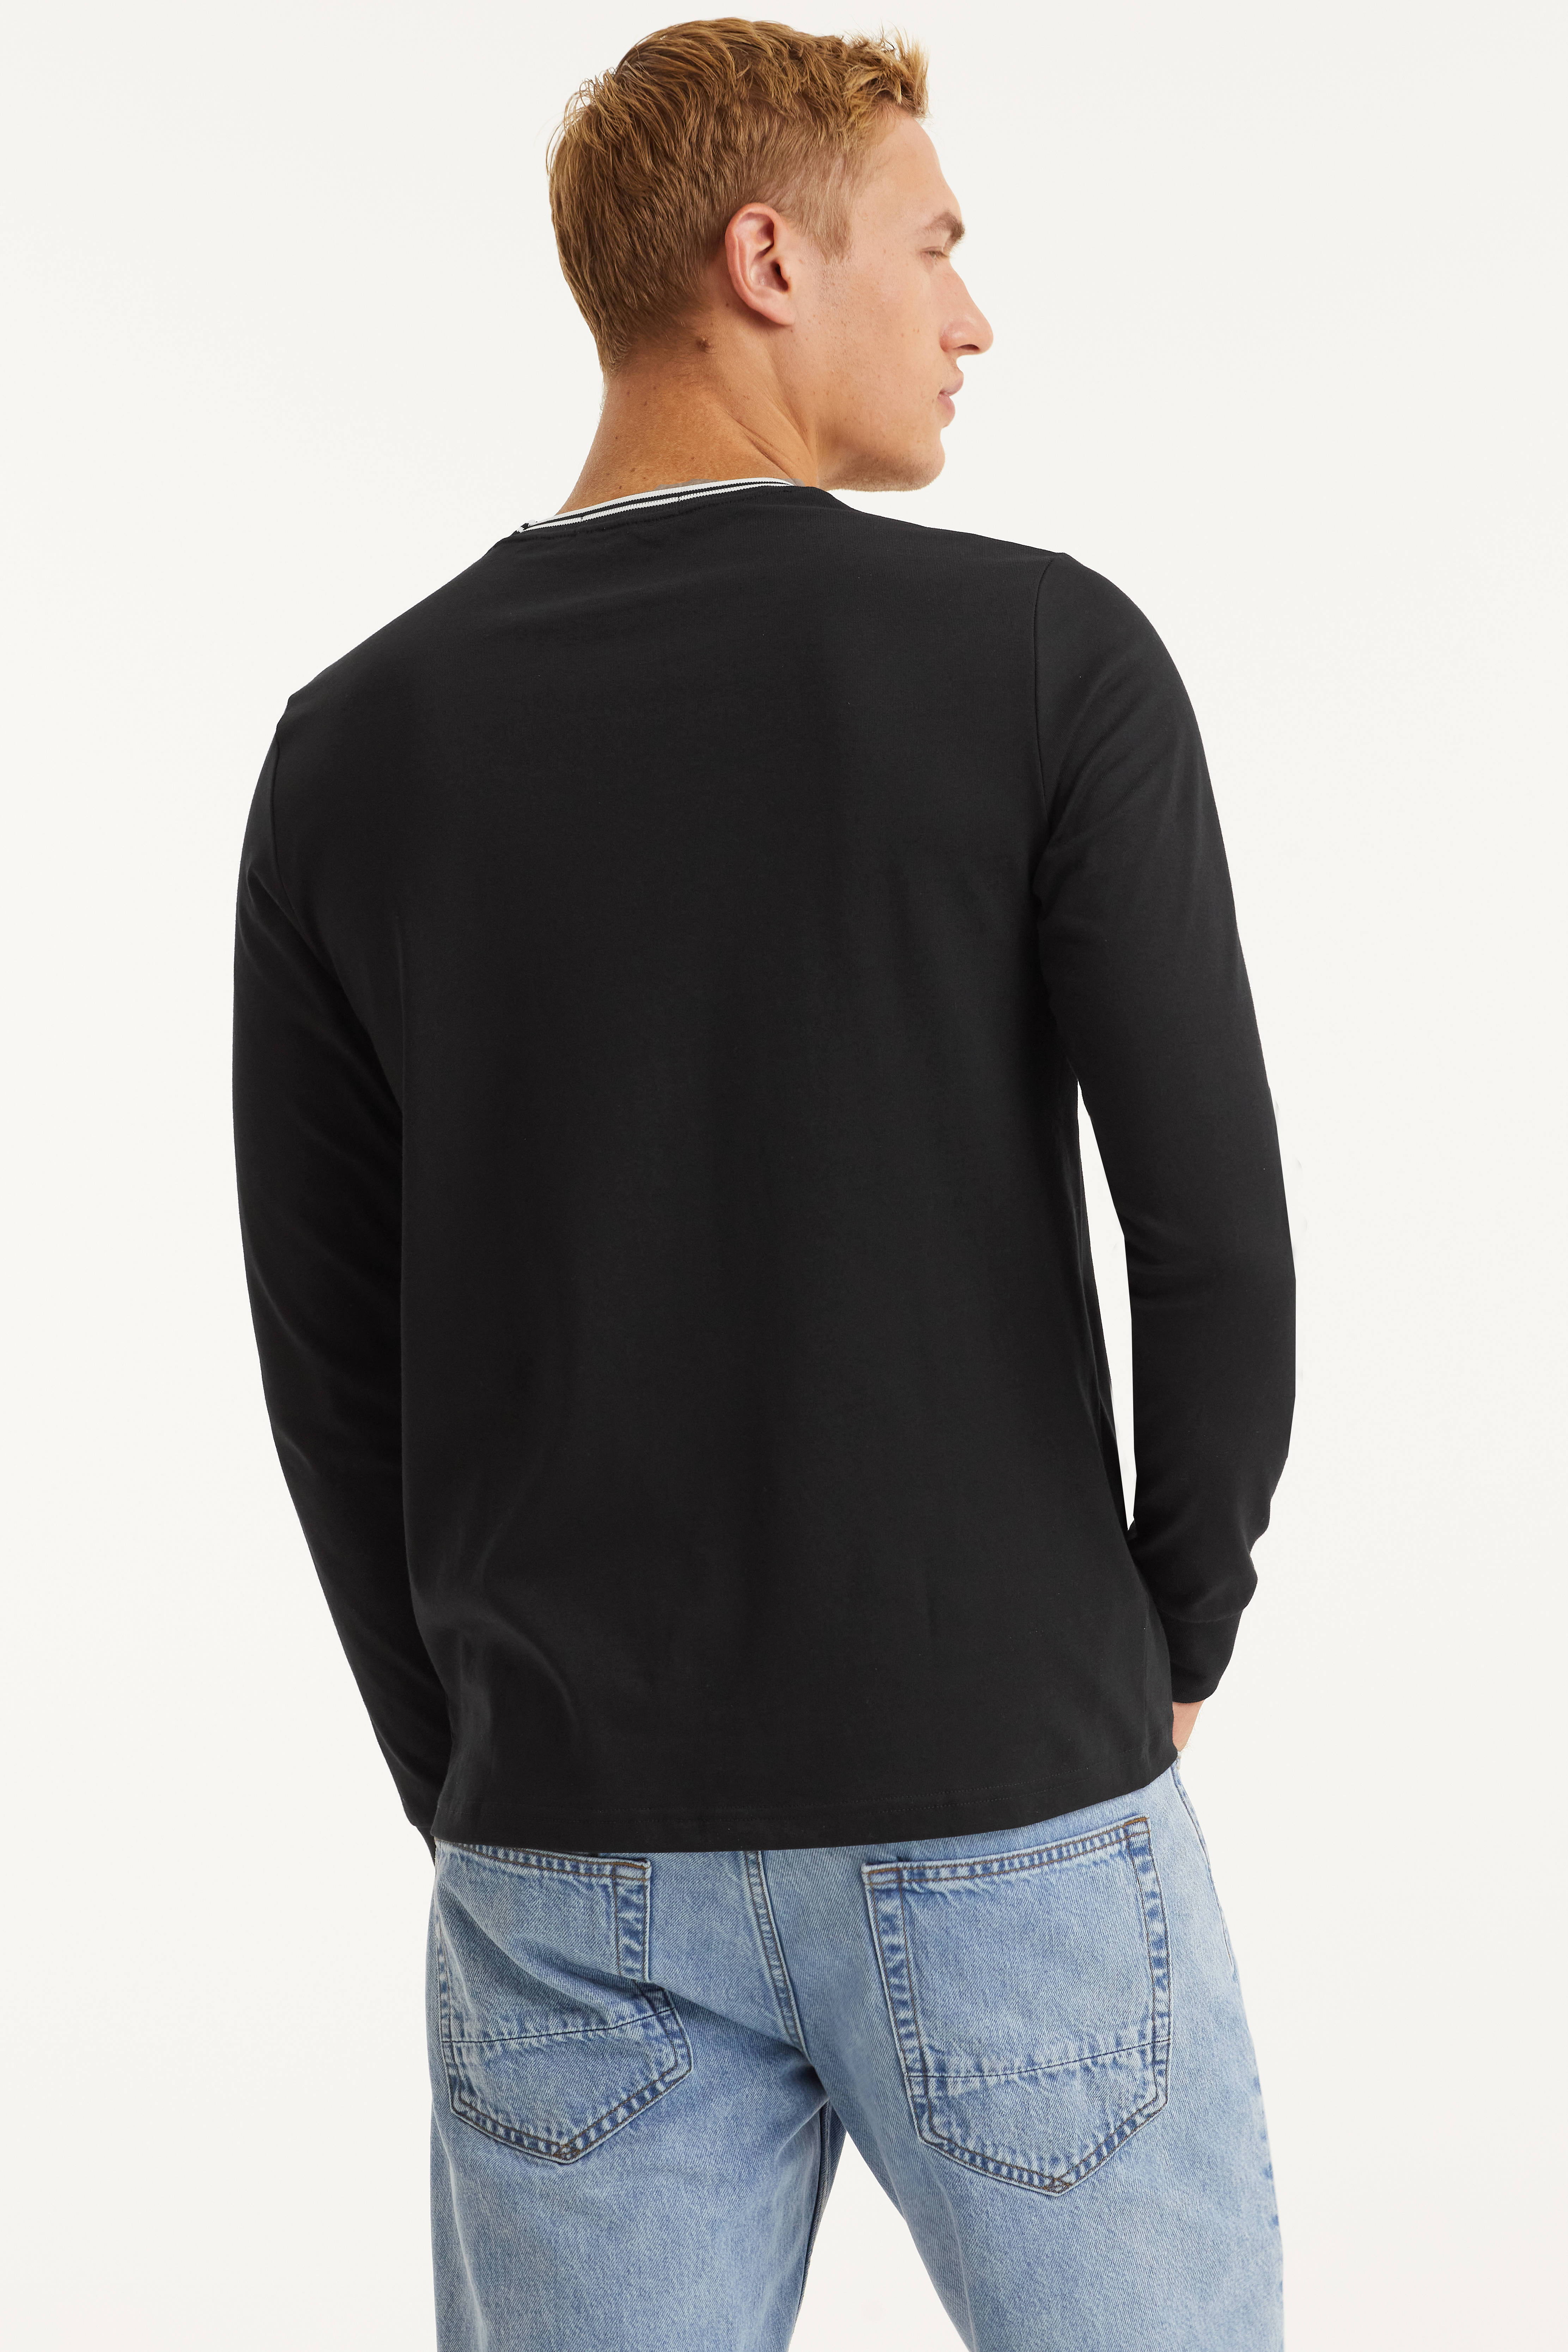 Fred Perry T shirt manica lunga con doppia riga e logo M9602 Nero , Zwart, Heren online kopen